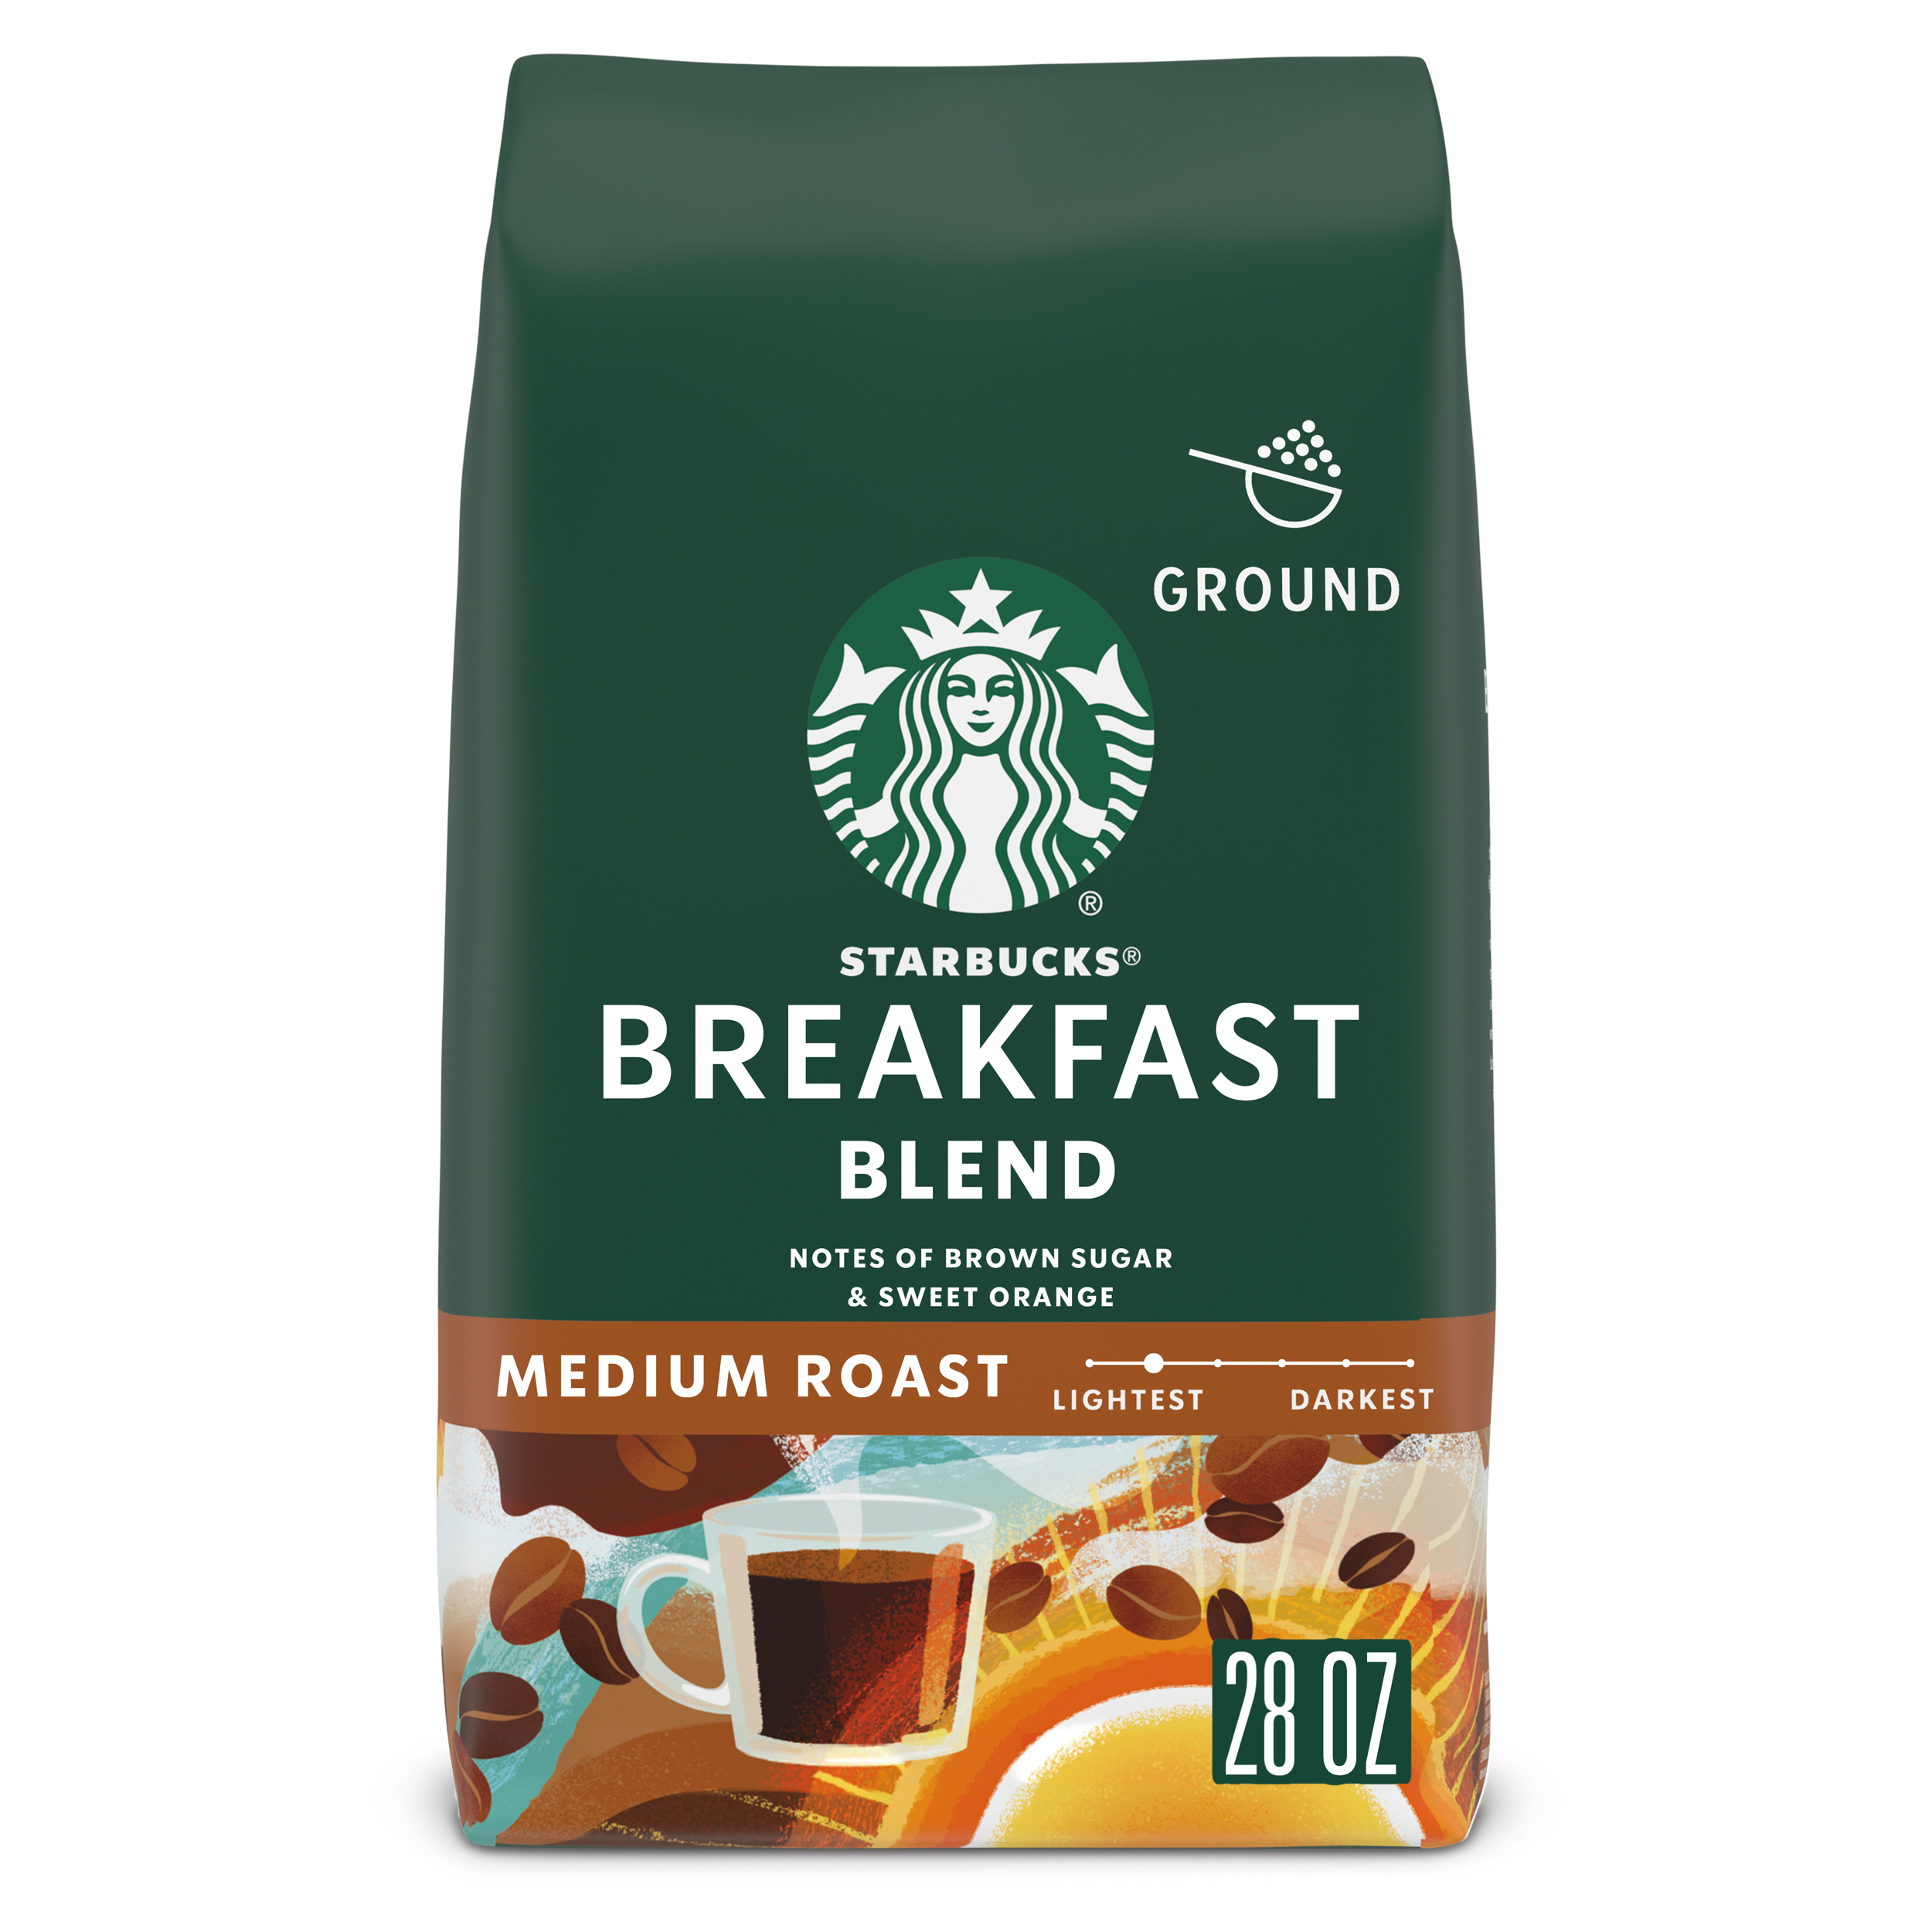 Starbucks Arabica Beans Breakfast Blend, Medium Roast, Ground Coffee, 28 oz - image 1 of 8